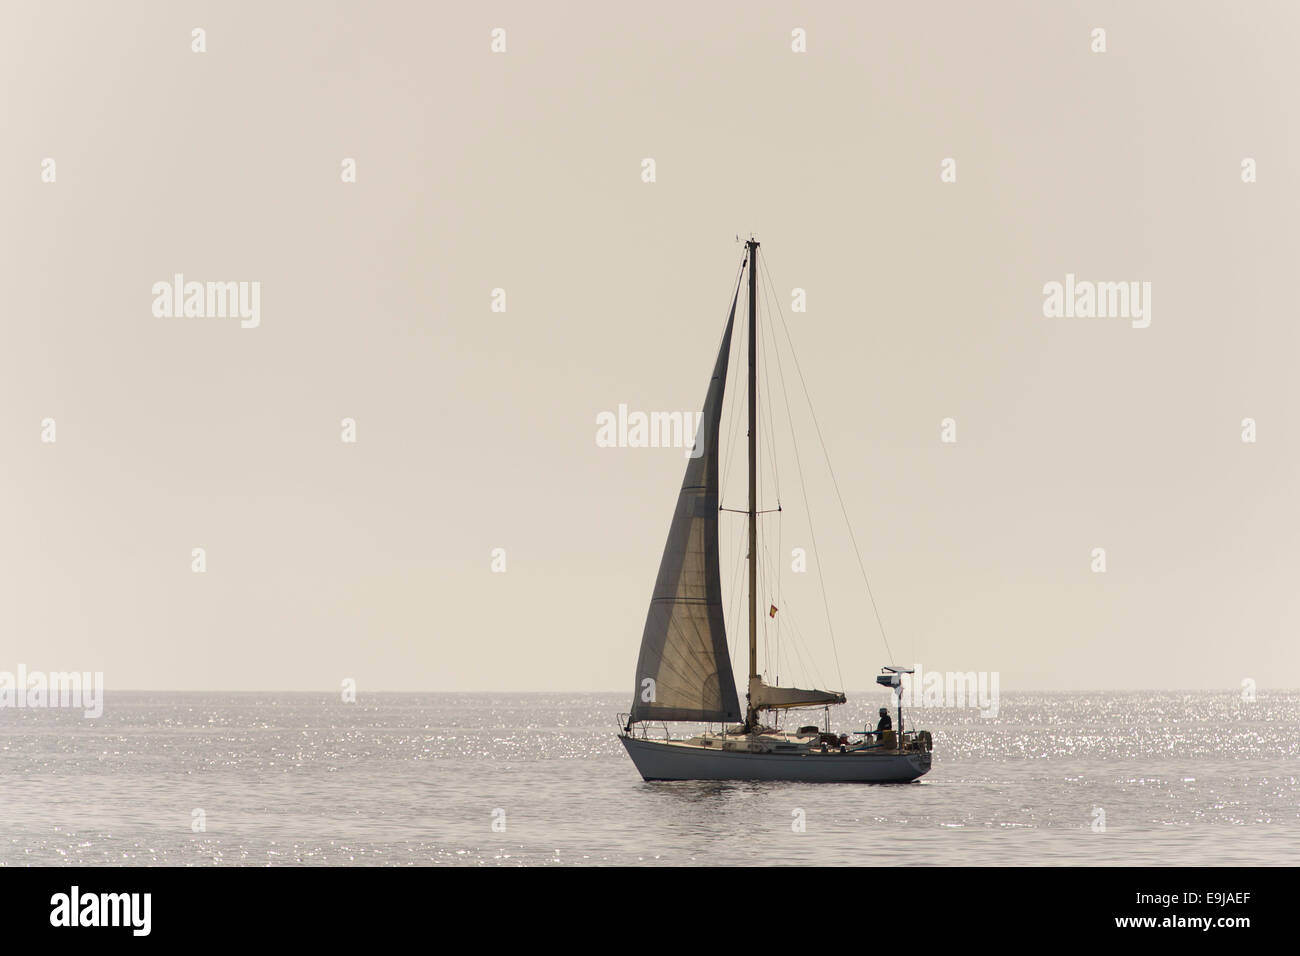 Sailing ship at sea on a still calm day. Stock Photo